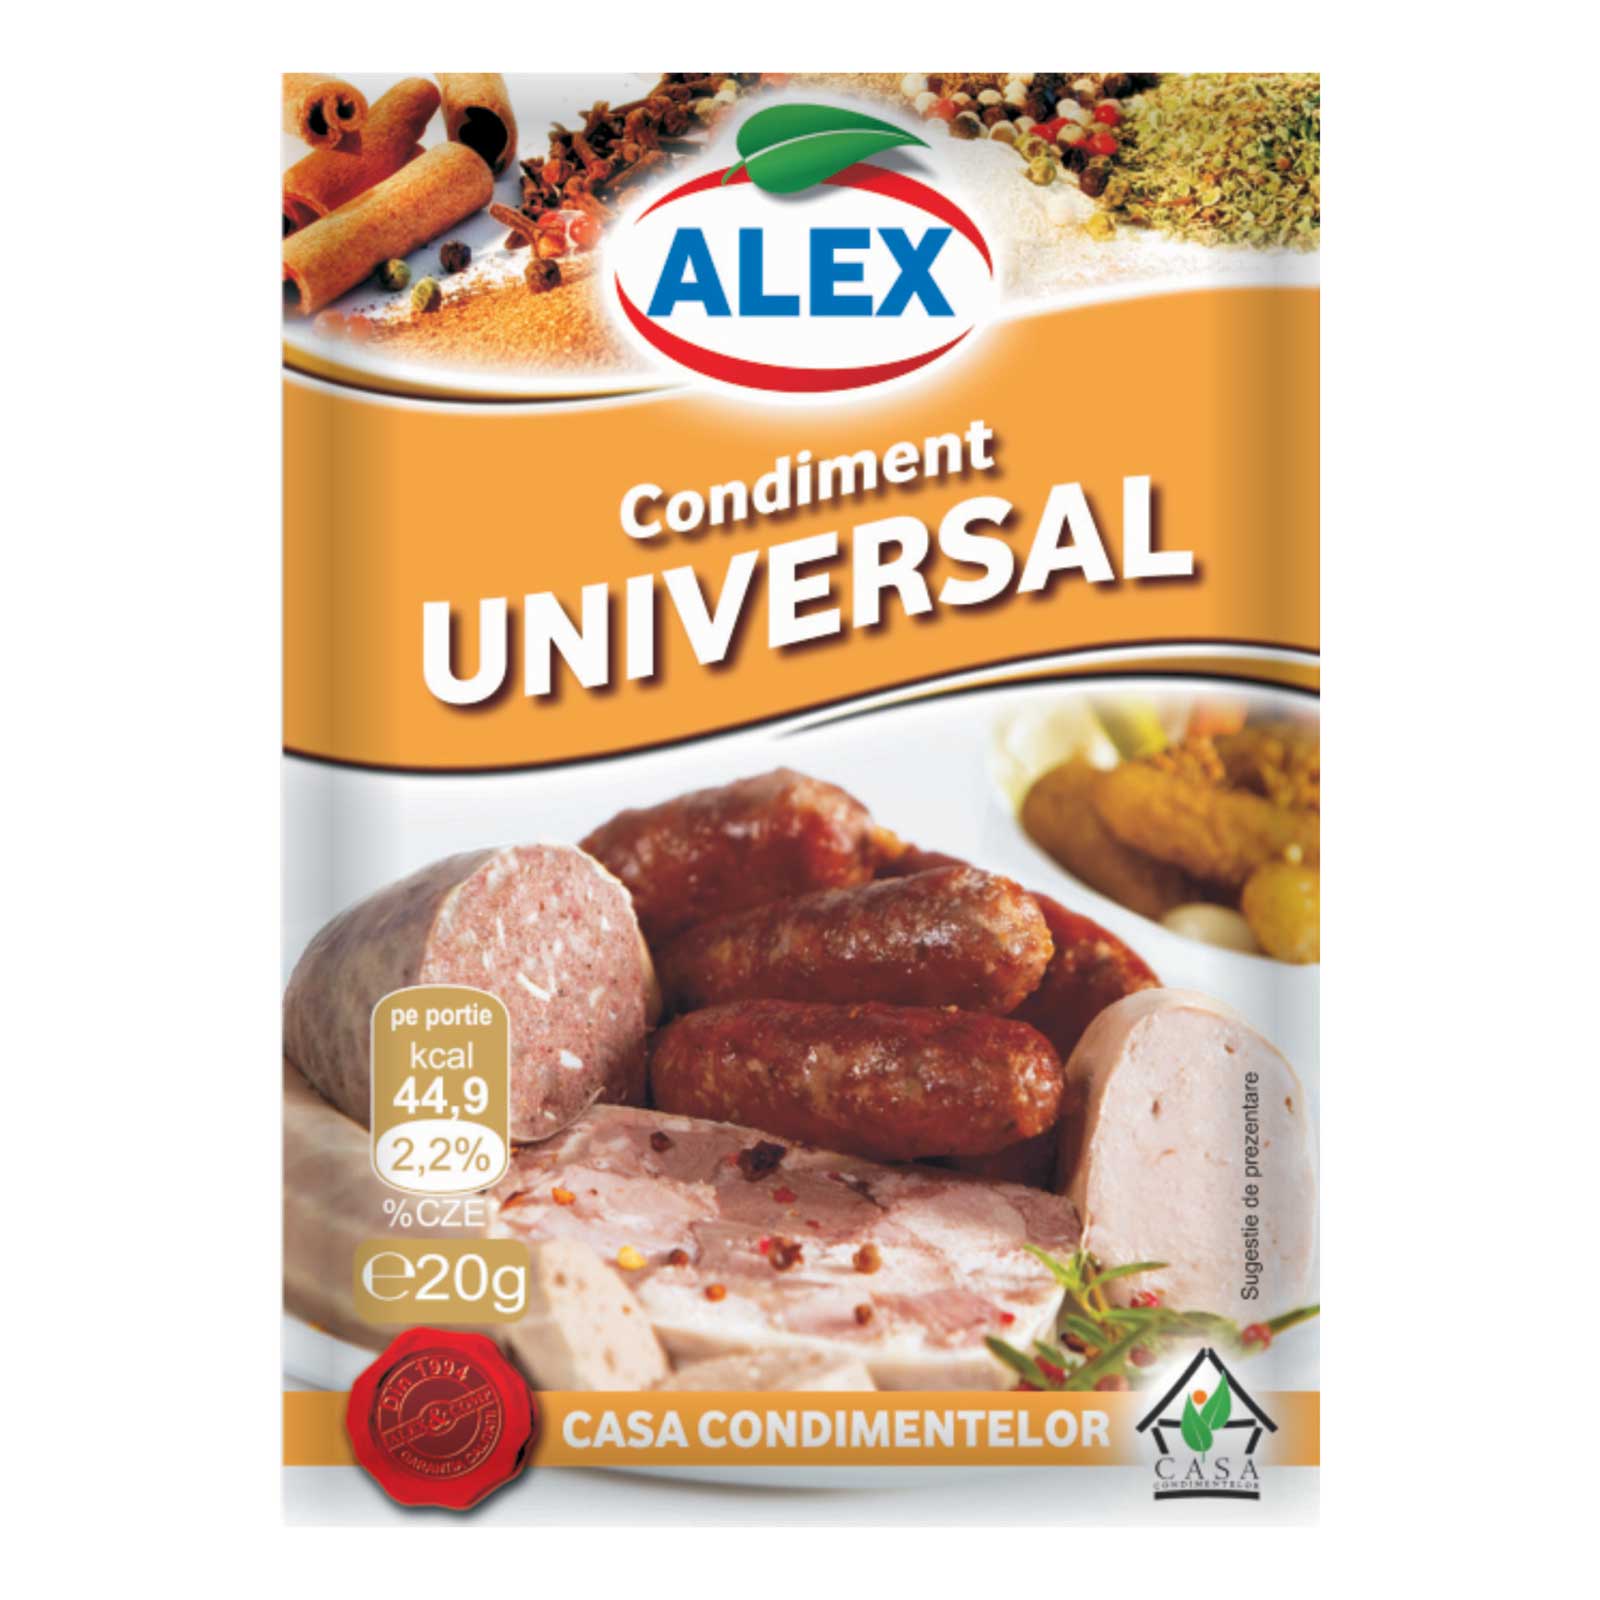 Condiment universal, Alex, 20g